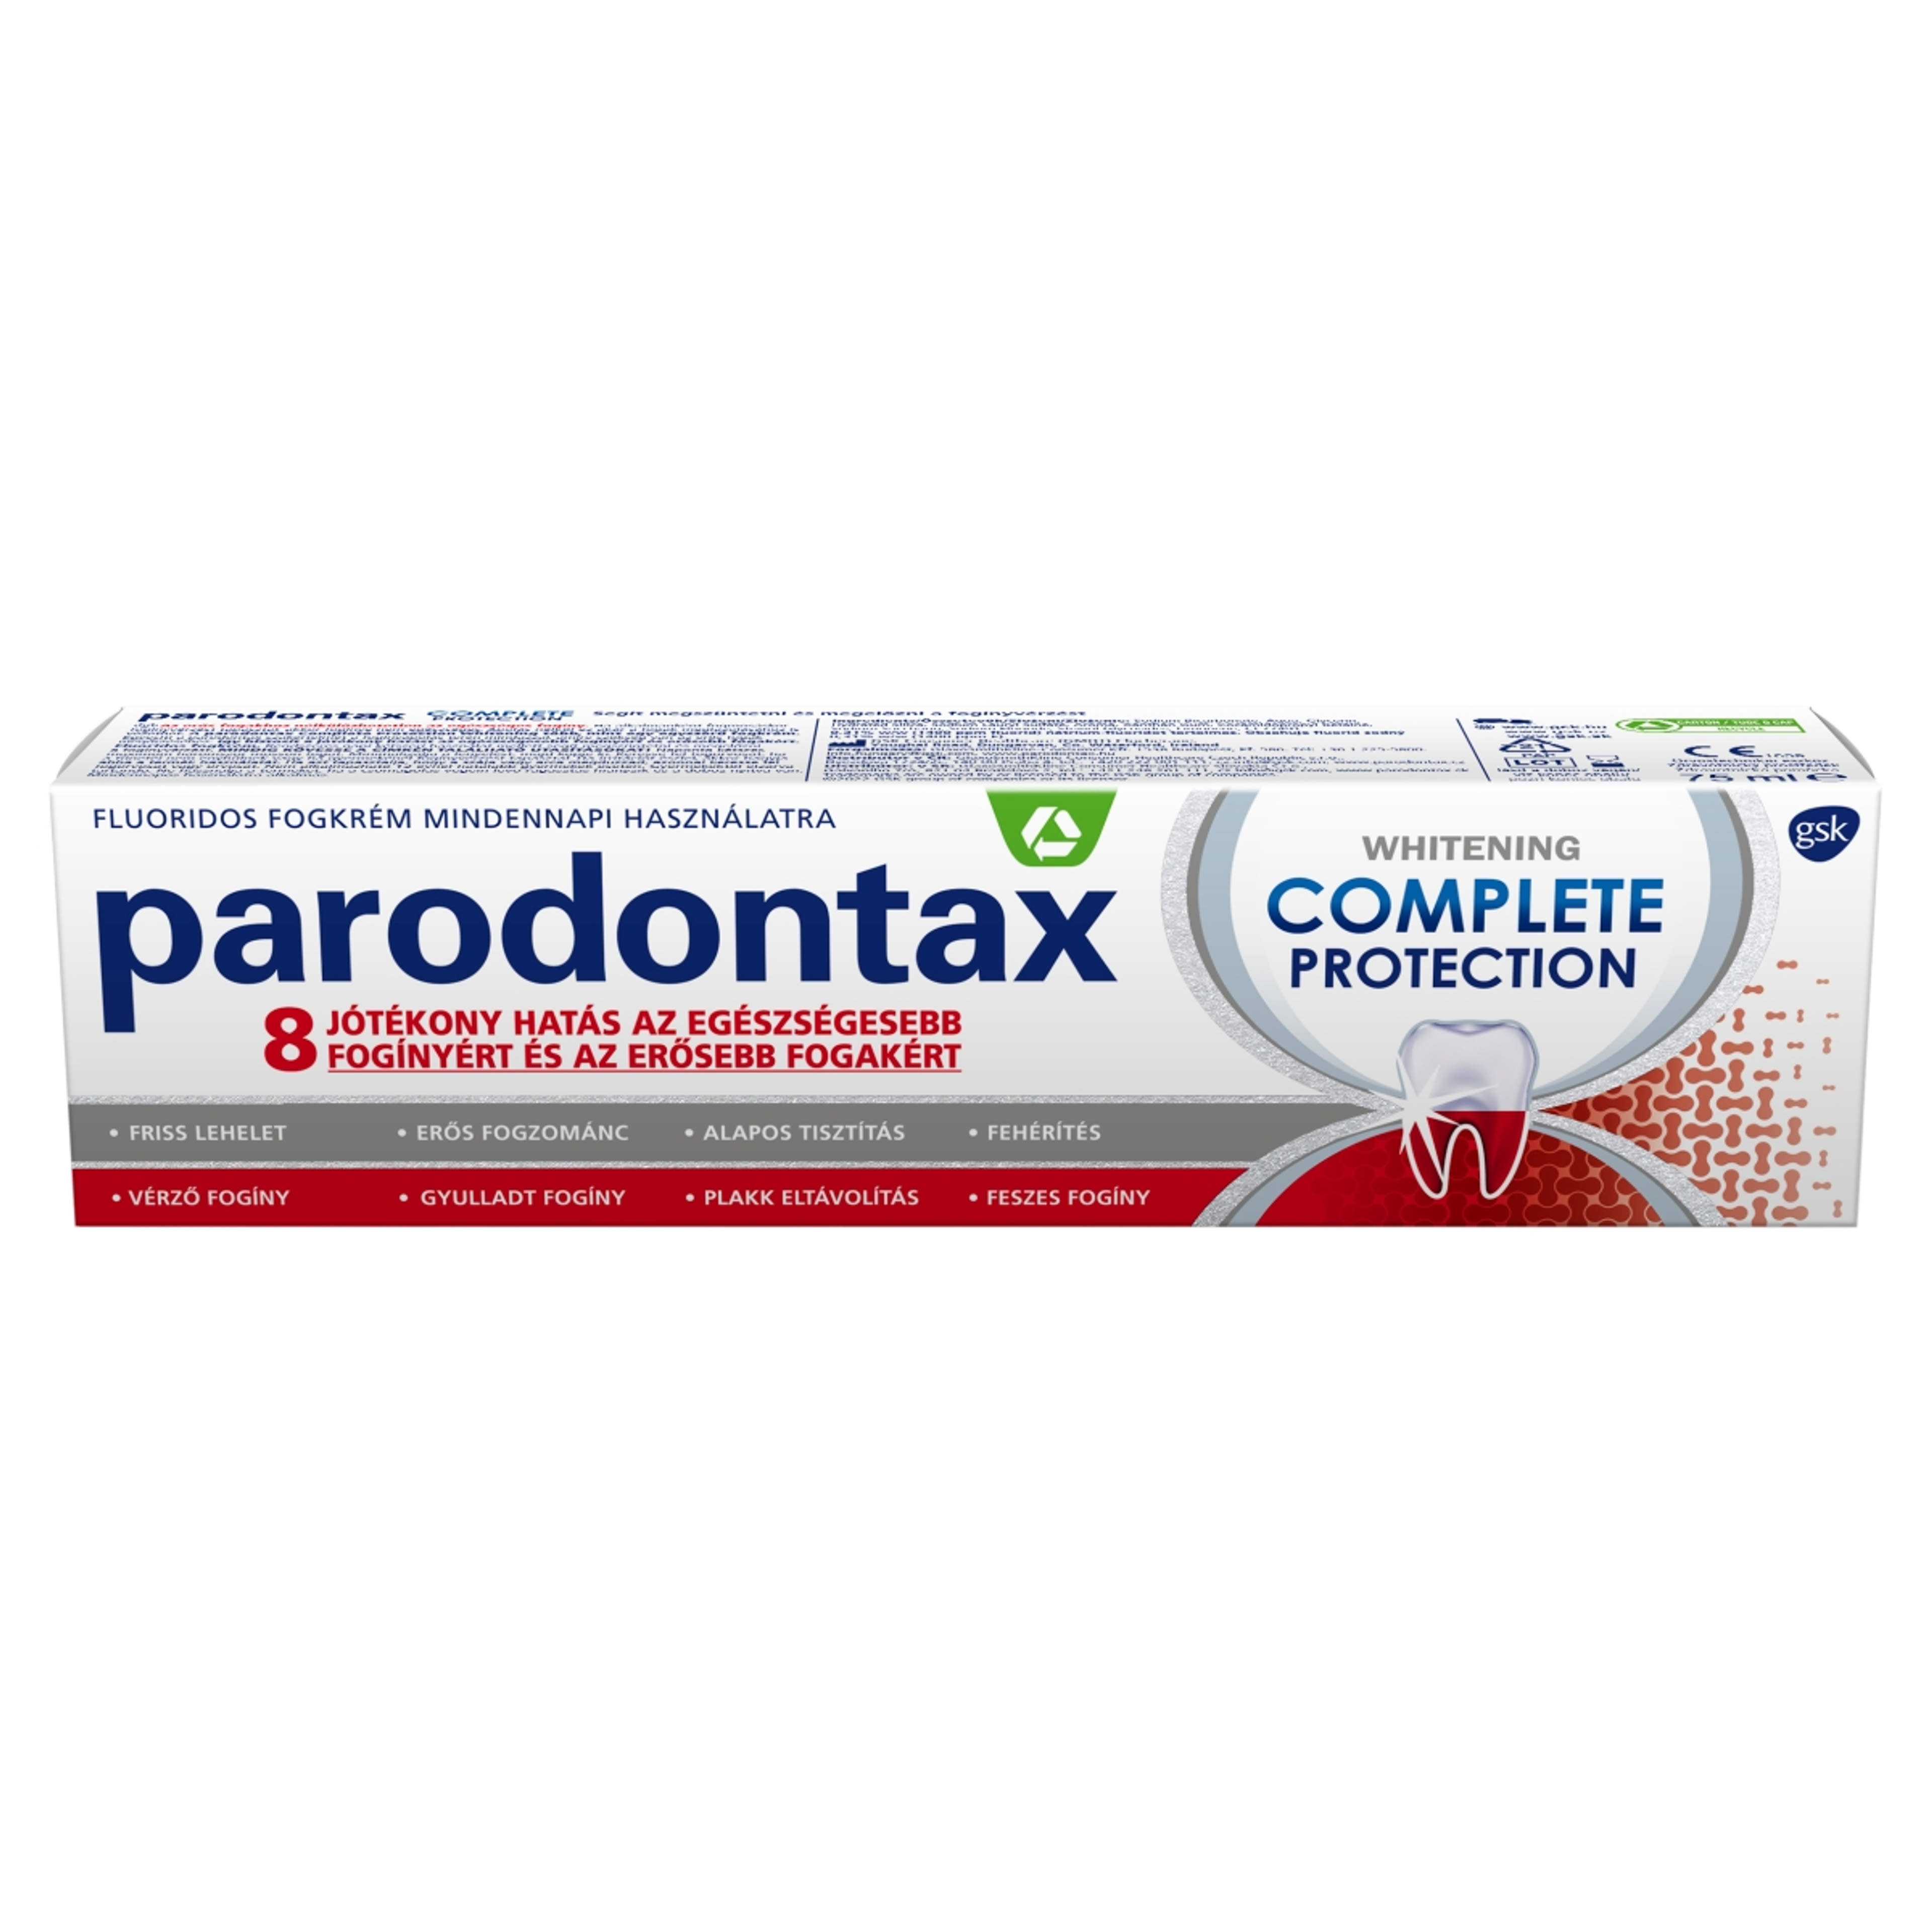 Parodontax Complete Protection Whitening fogkrém - 75 ml-1